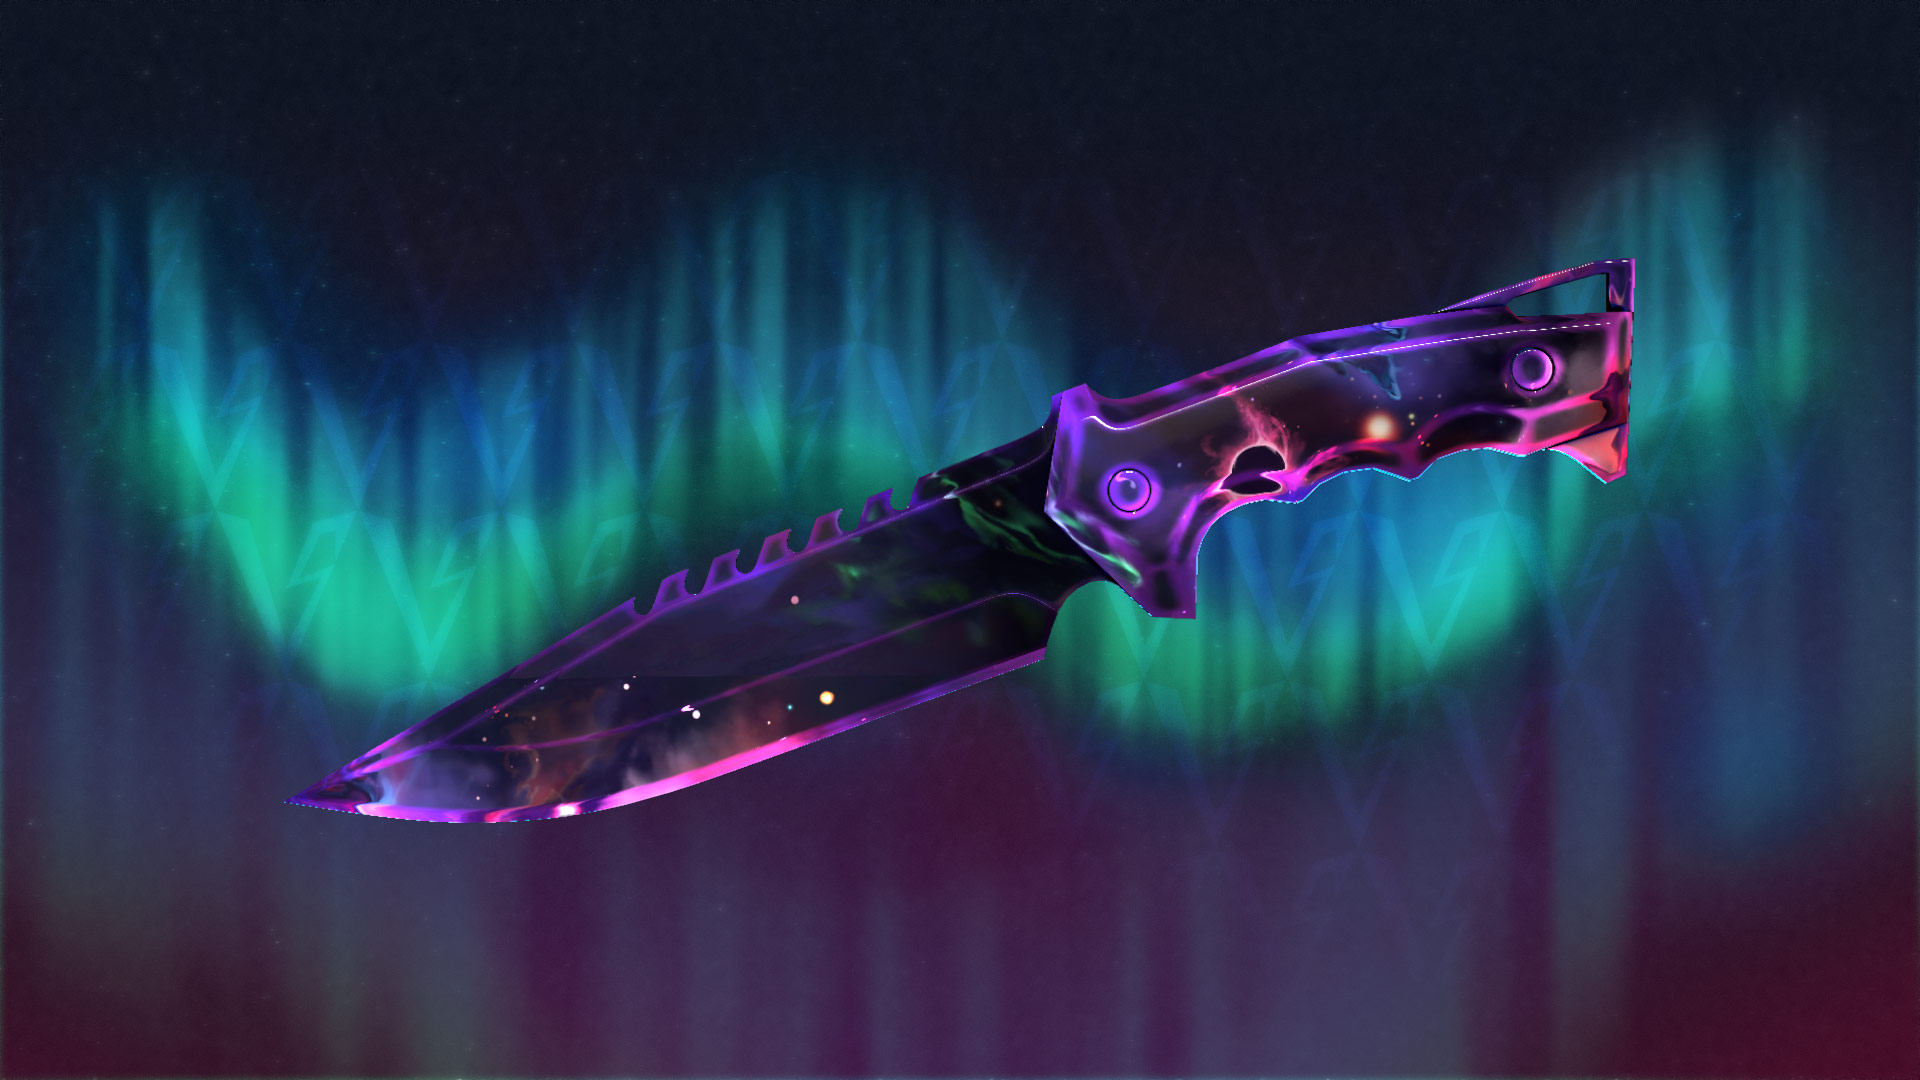 Valorant Nebula Knife skin